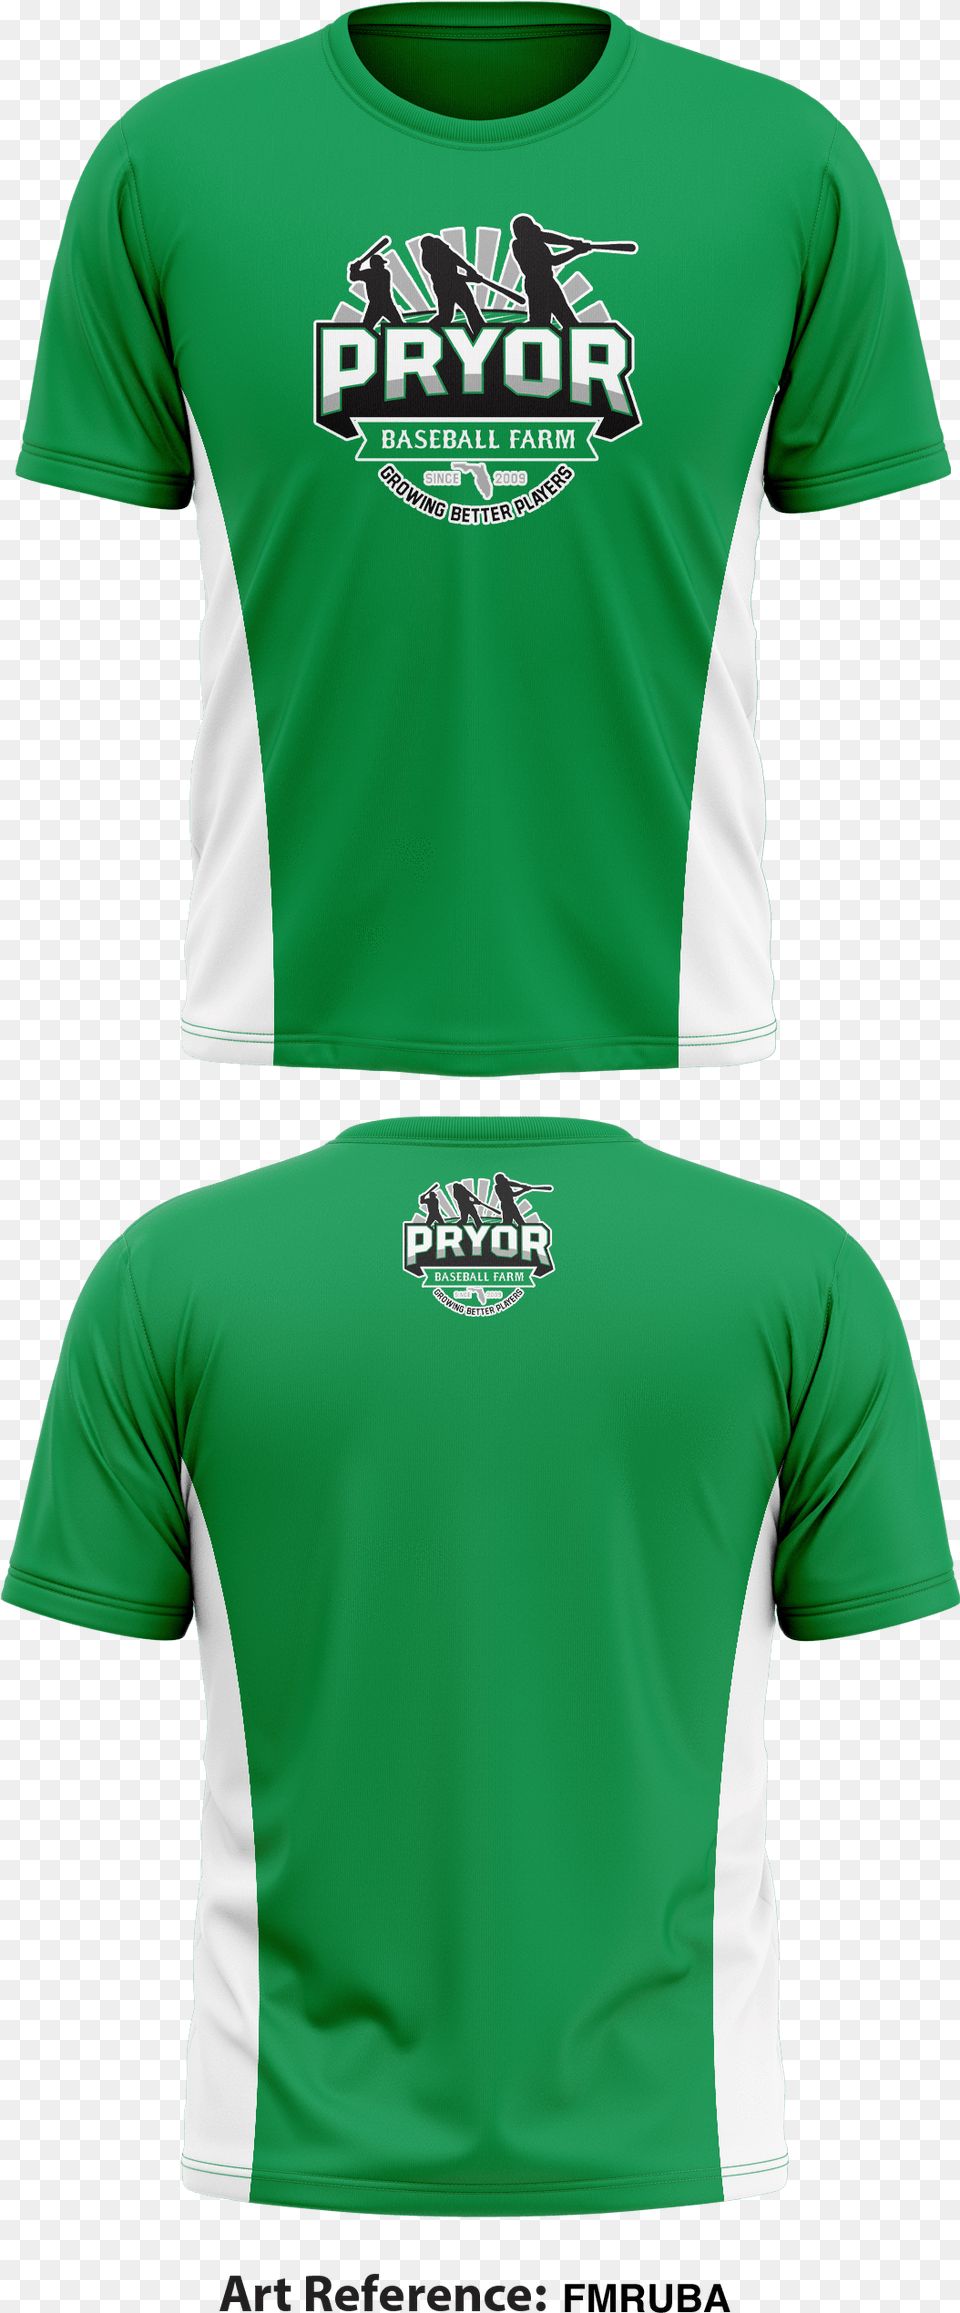 Pryor Baseball Farm Short Sleeve Hybrid Performance Shirt, Clothing, T-shirt, Jersey Png Image